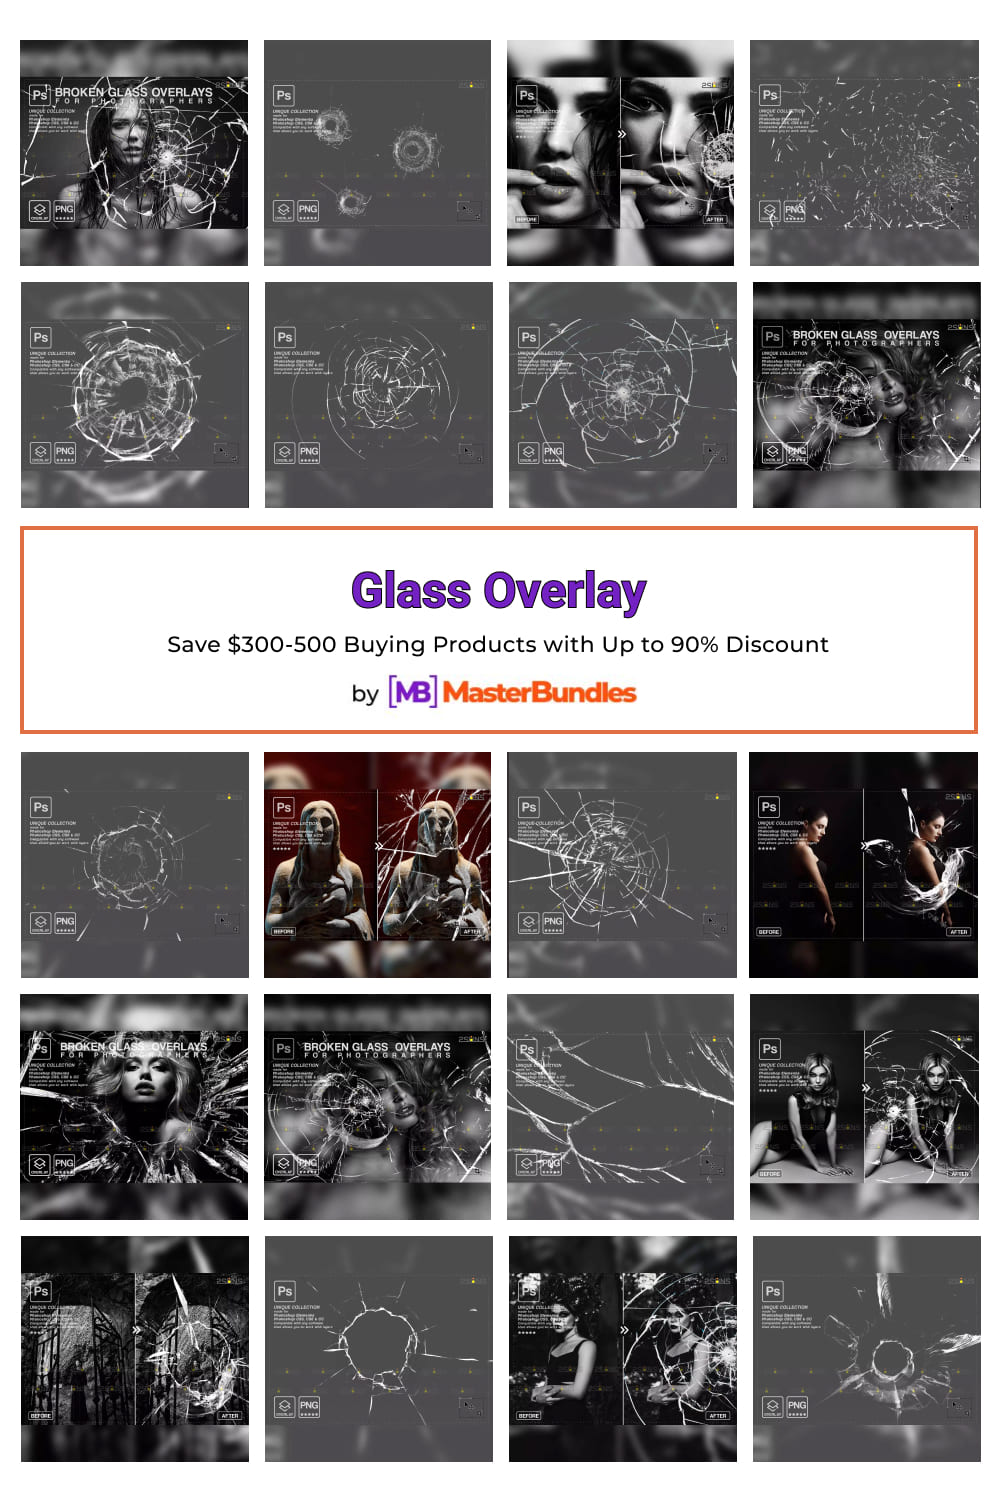 Glass Overlay Pinterest image.